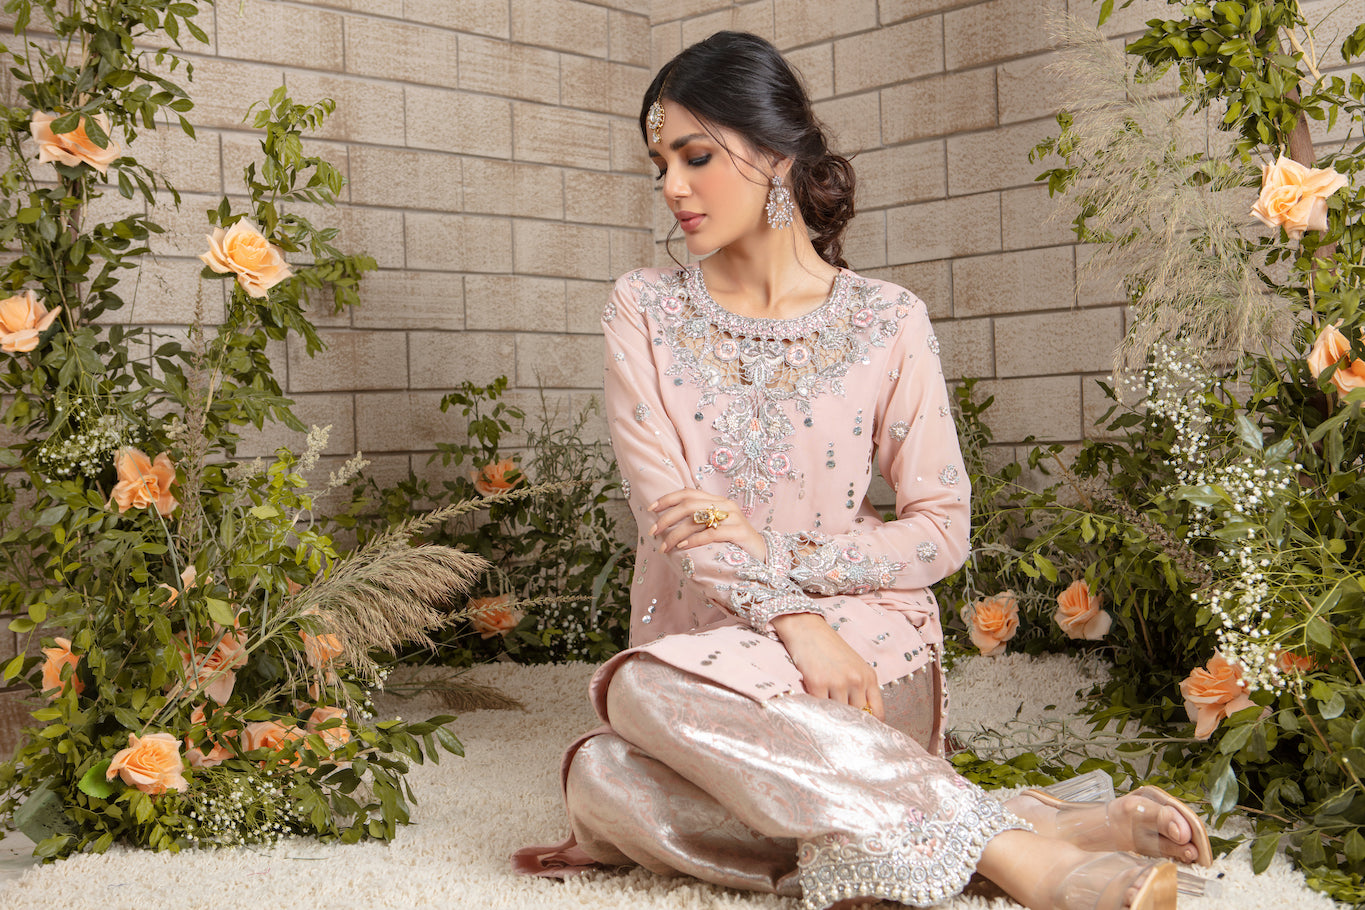 Nina | Pakistani Designer Outfit | Sarosh Salman